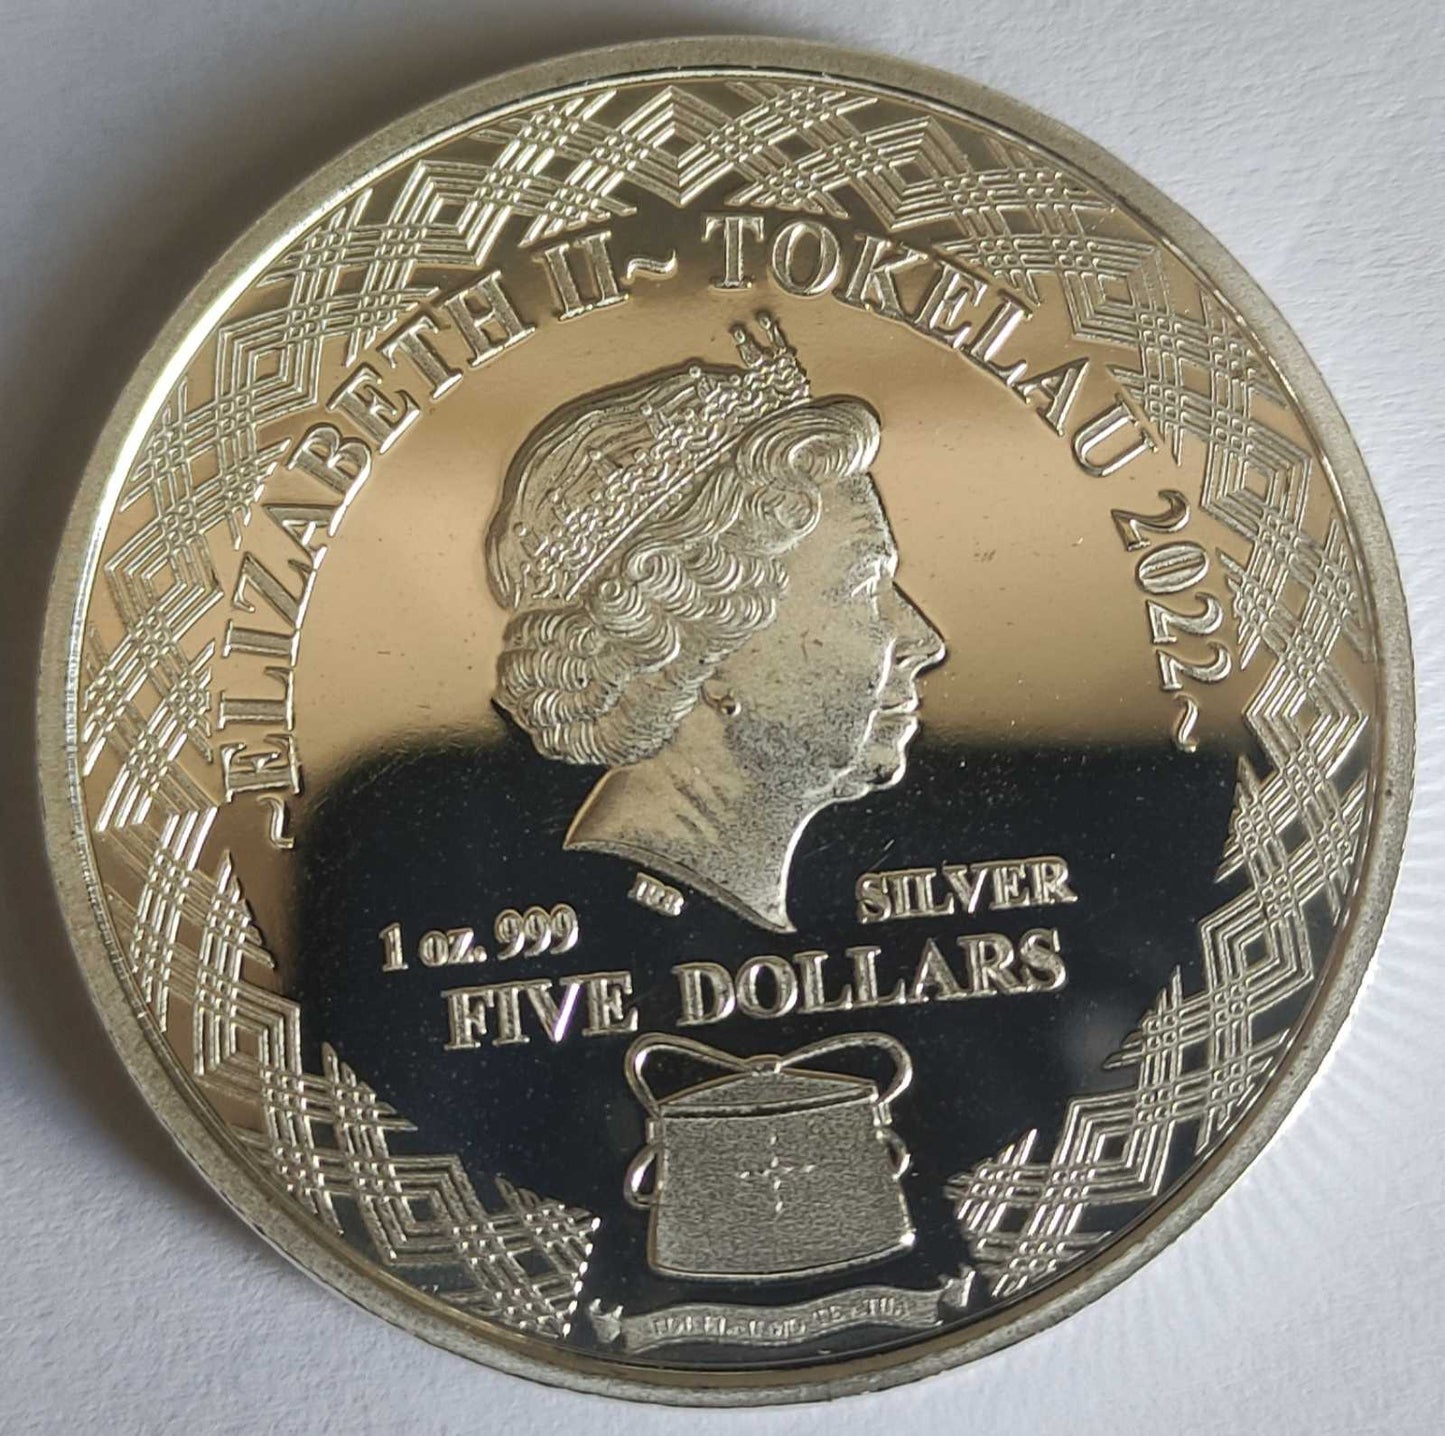 2022 Tokelau Lionfish 1 oz Silver Coin BU in Capsule